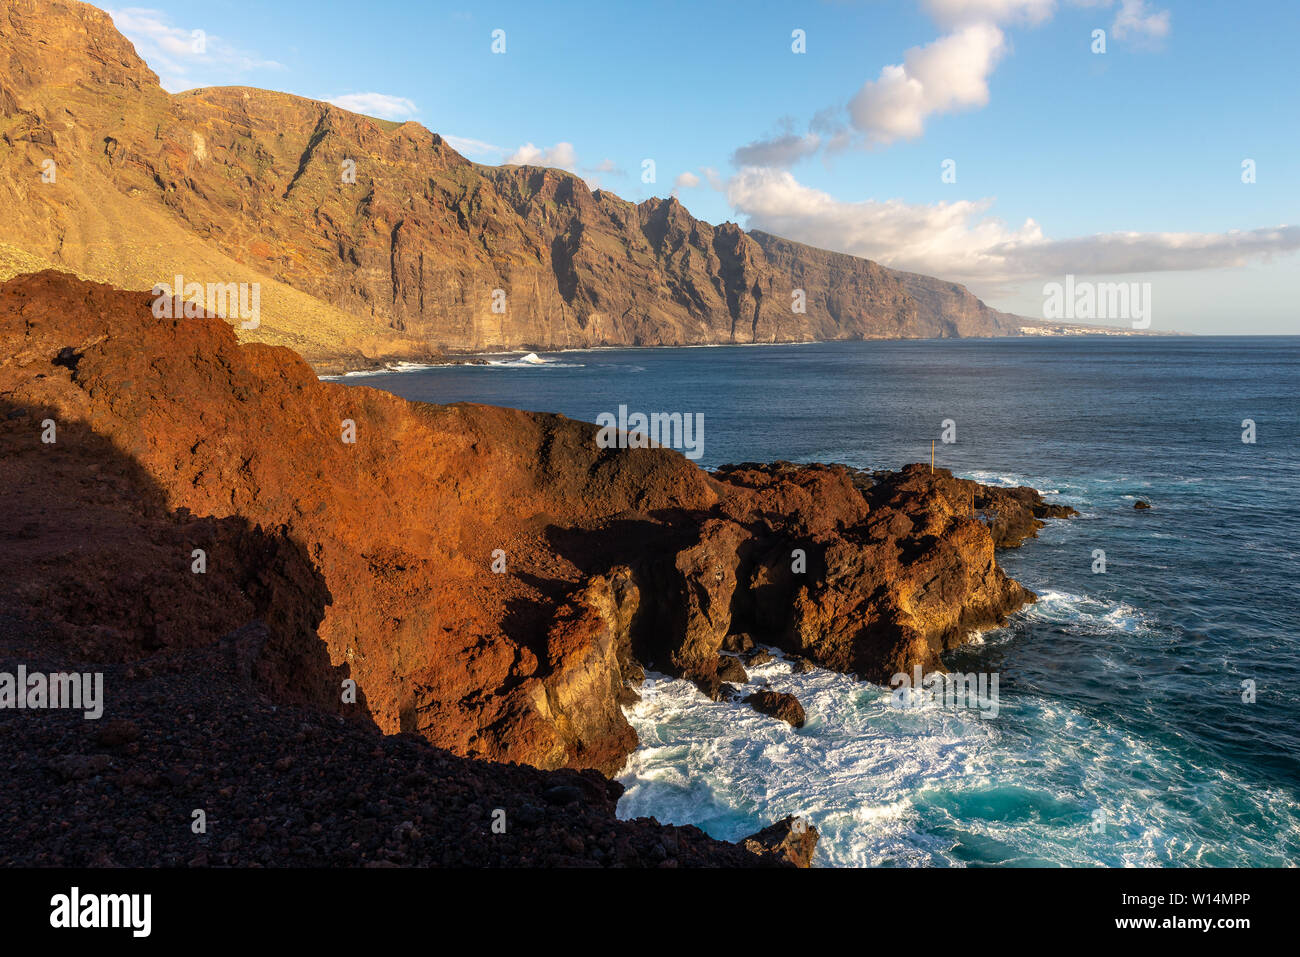 Los Gigantes cliffs (Giants cliffs) from Punta de Teno cape in Tenerife island, Spain Stock Photo